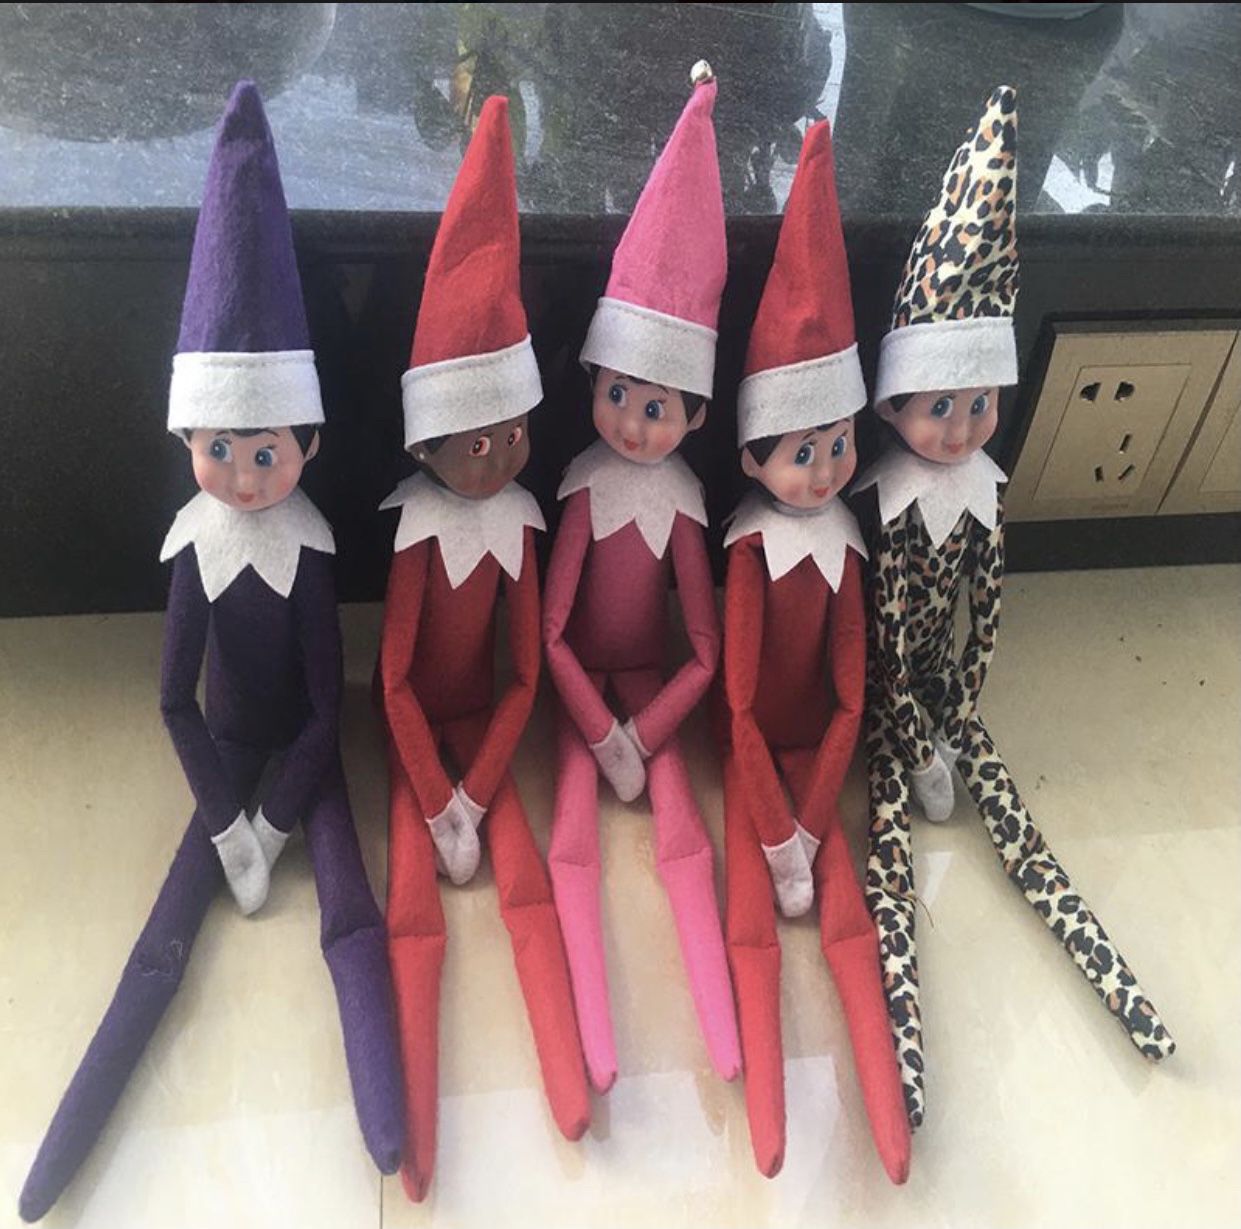 $17 Elf On The shelf Plush Dolls Any Color